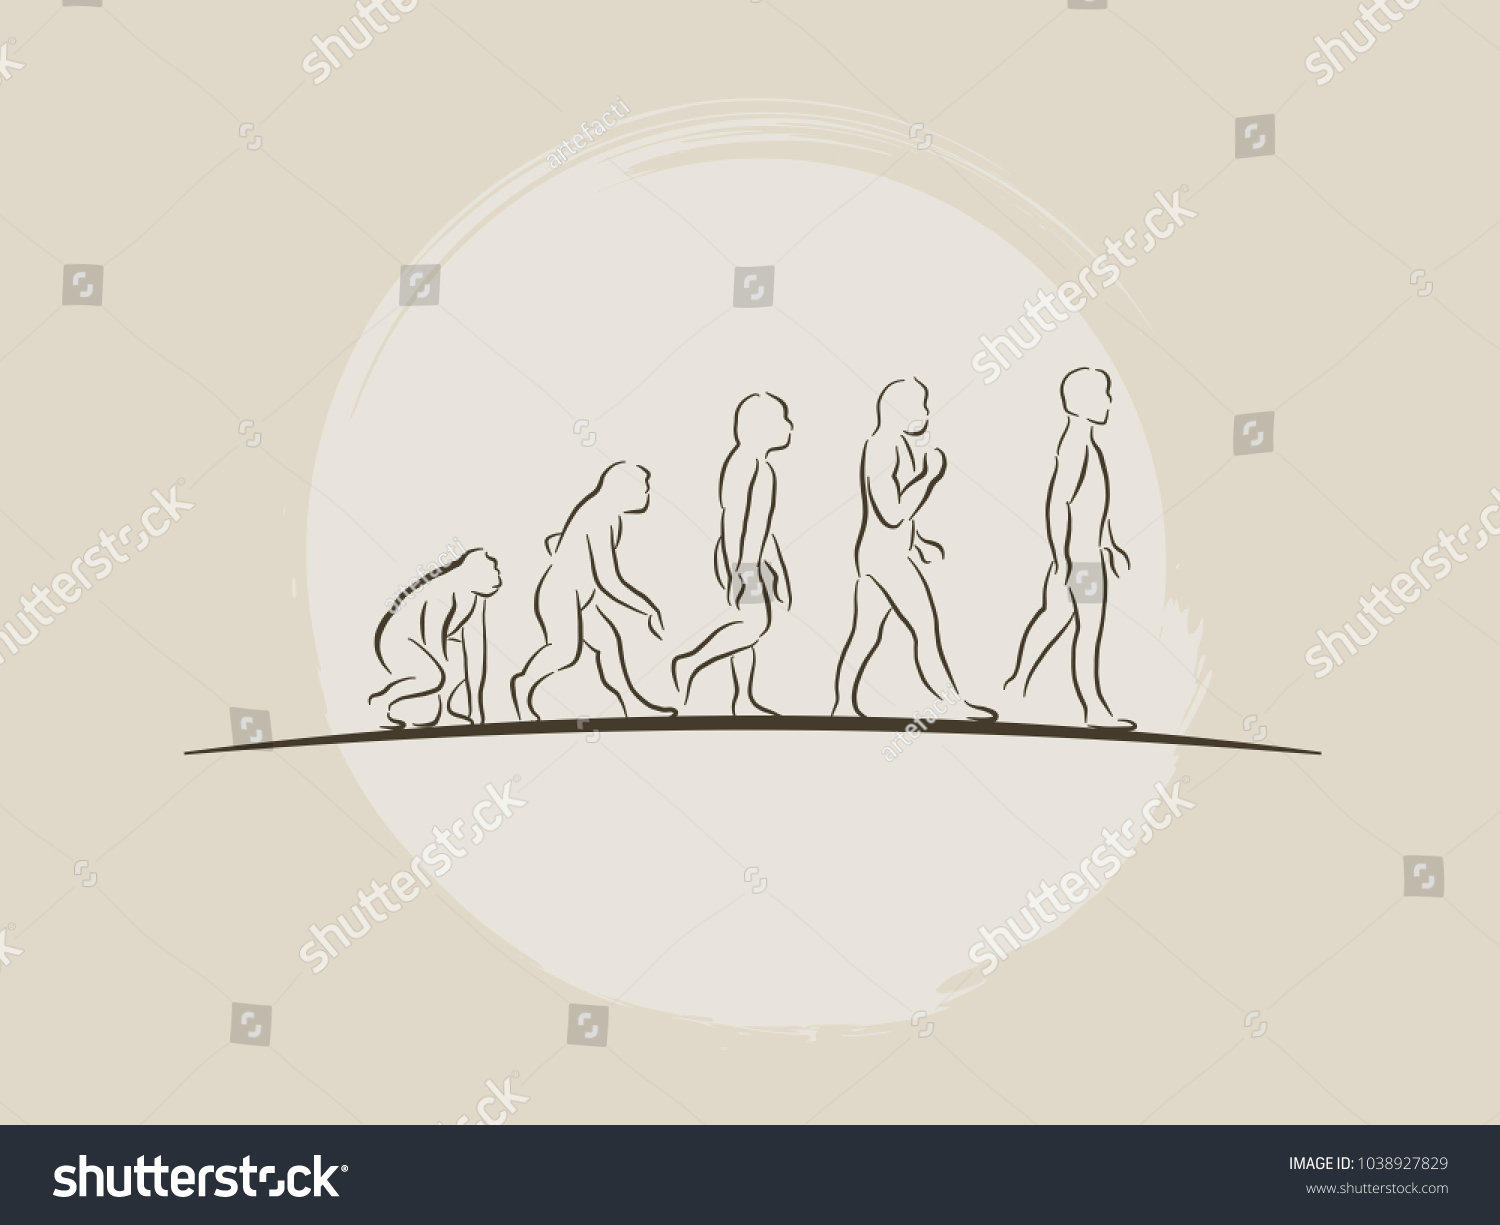 SVG of Theory of evolution of man - Human development - Hand drawn sketch vector illustration svg